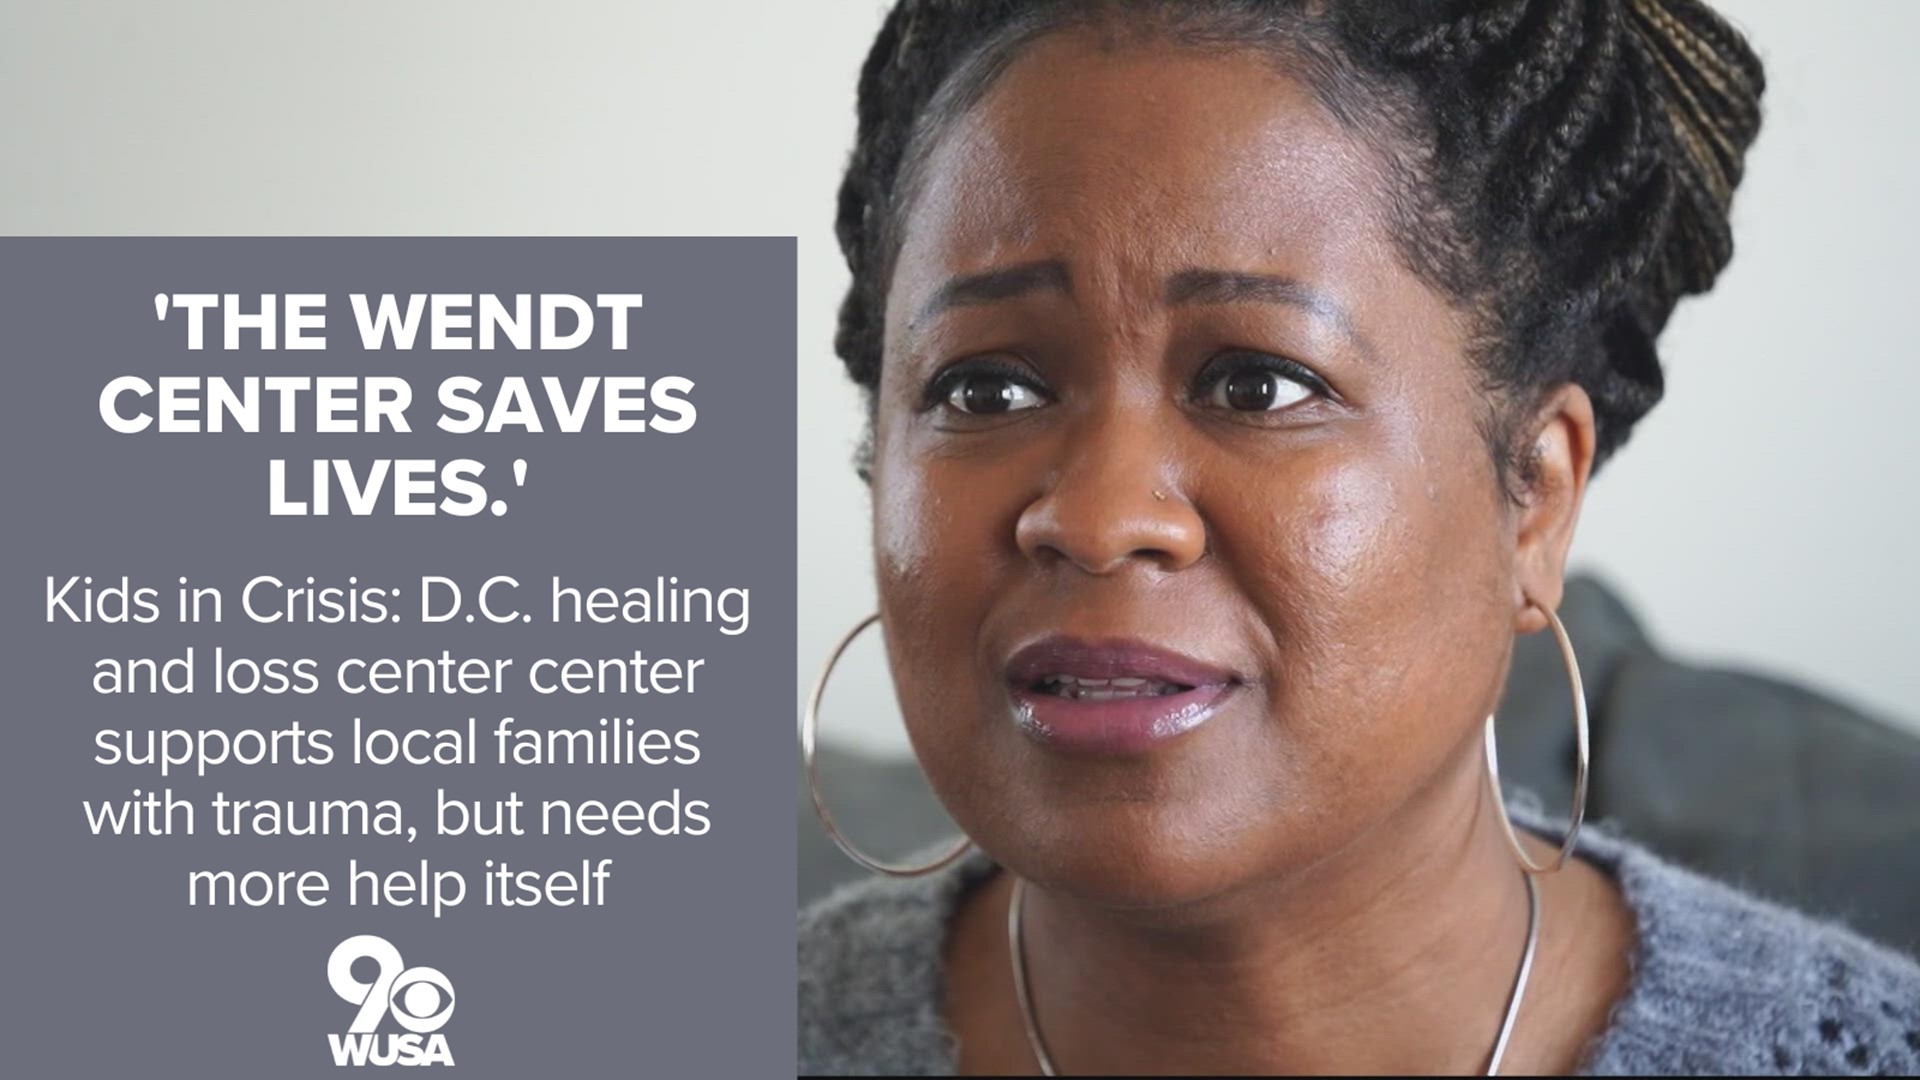 "The Wendt Center saves lives."